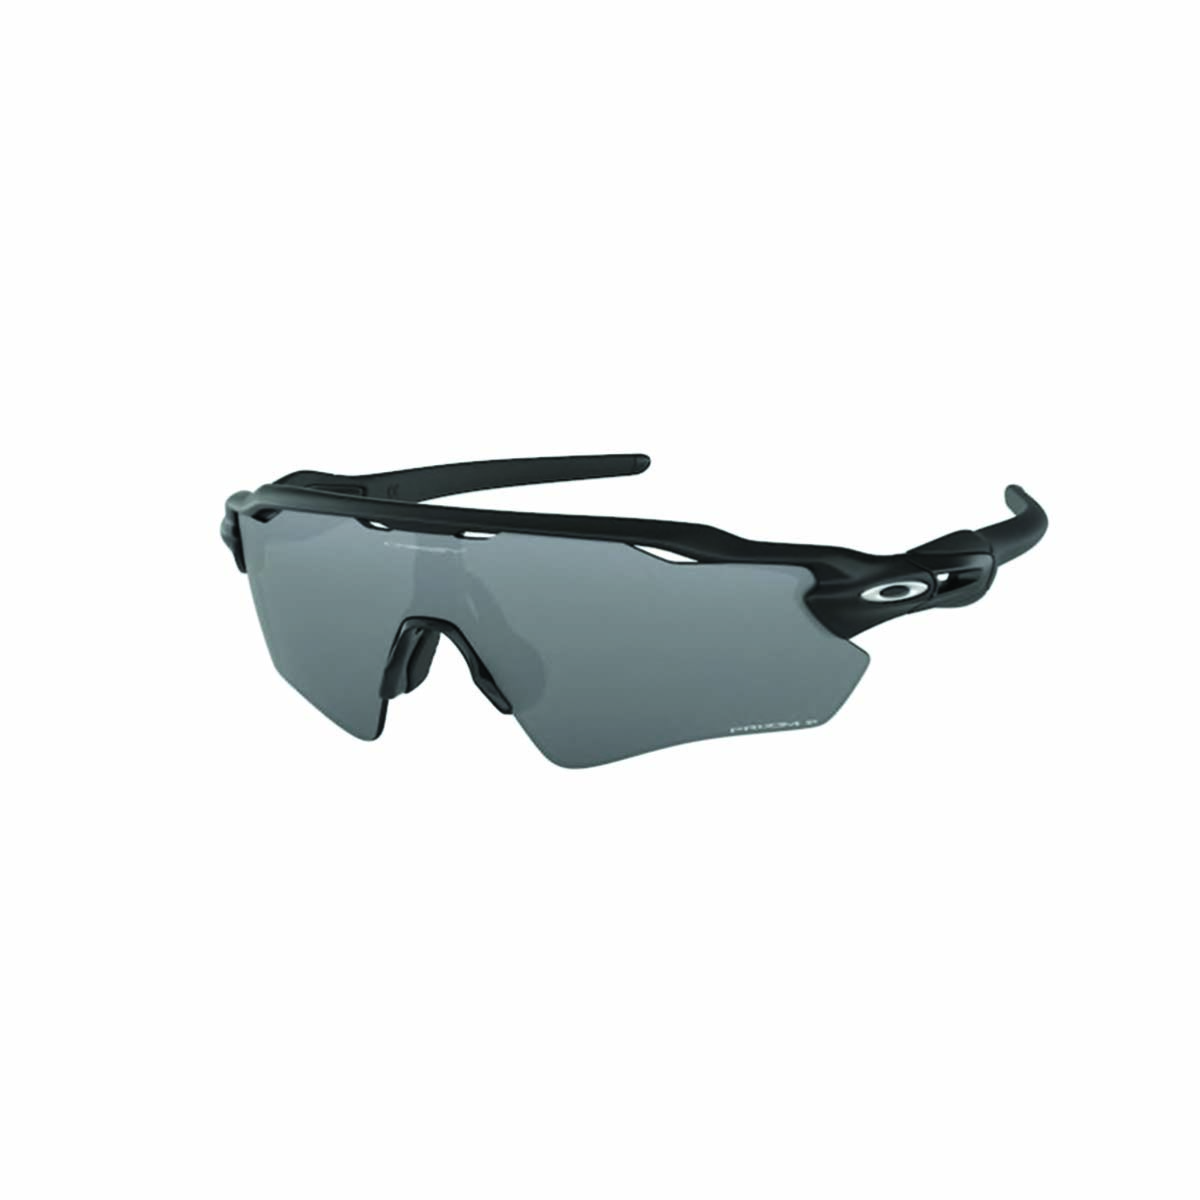 Eyes on Brickell: Oakley Sunglasses - 0OO9208 920805